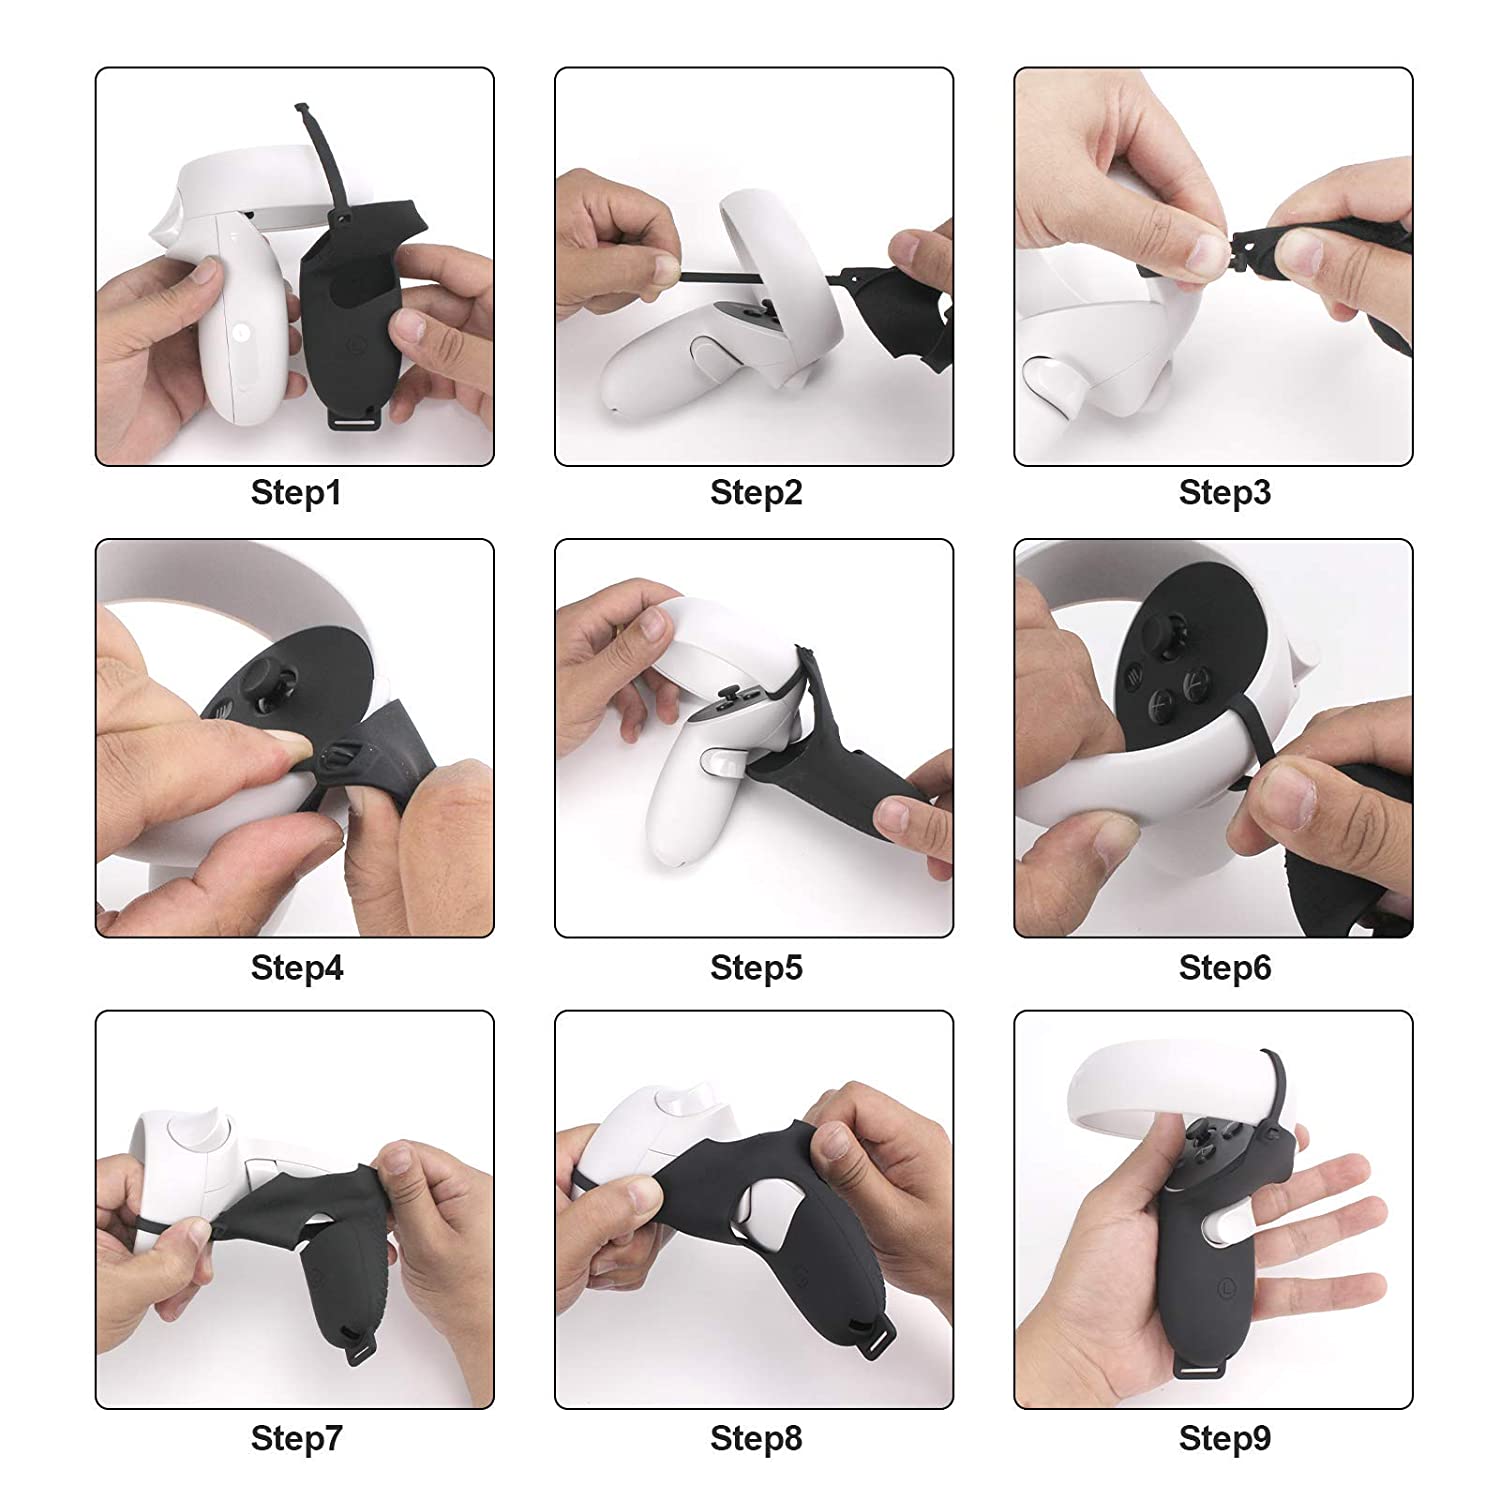 Installation of grip cover method 2 tutorial